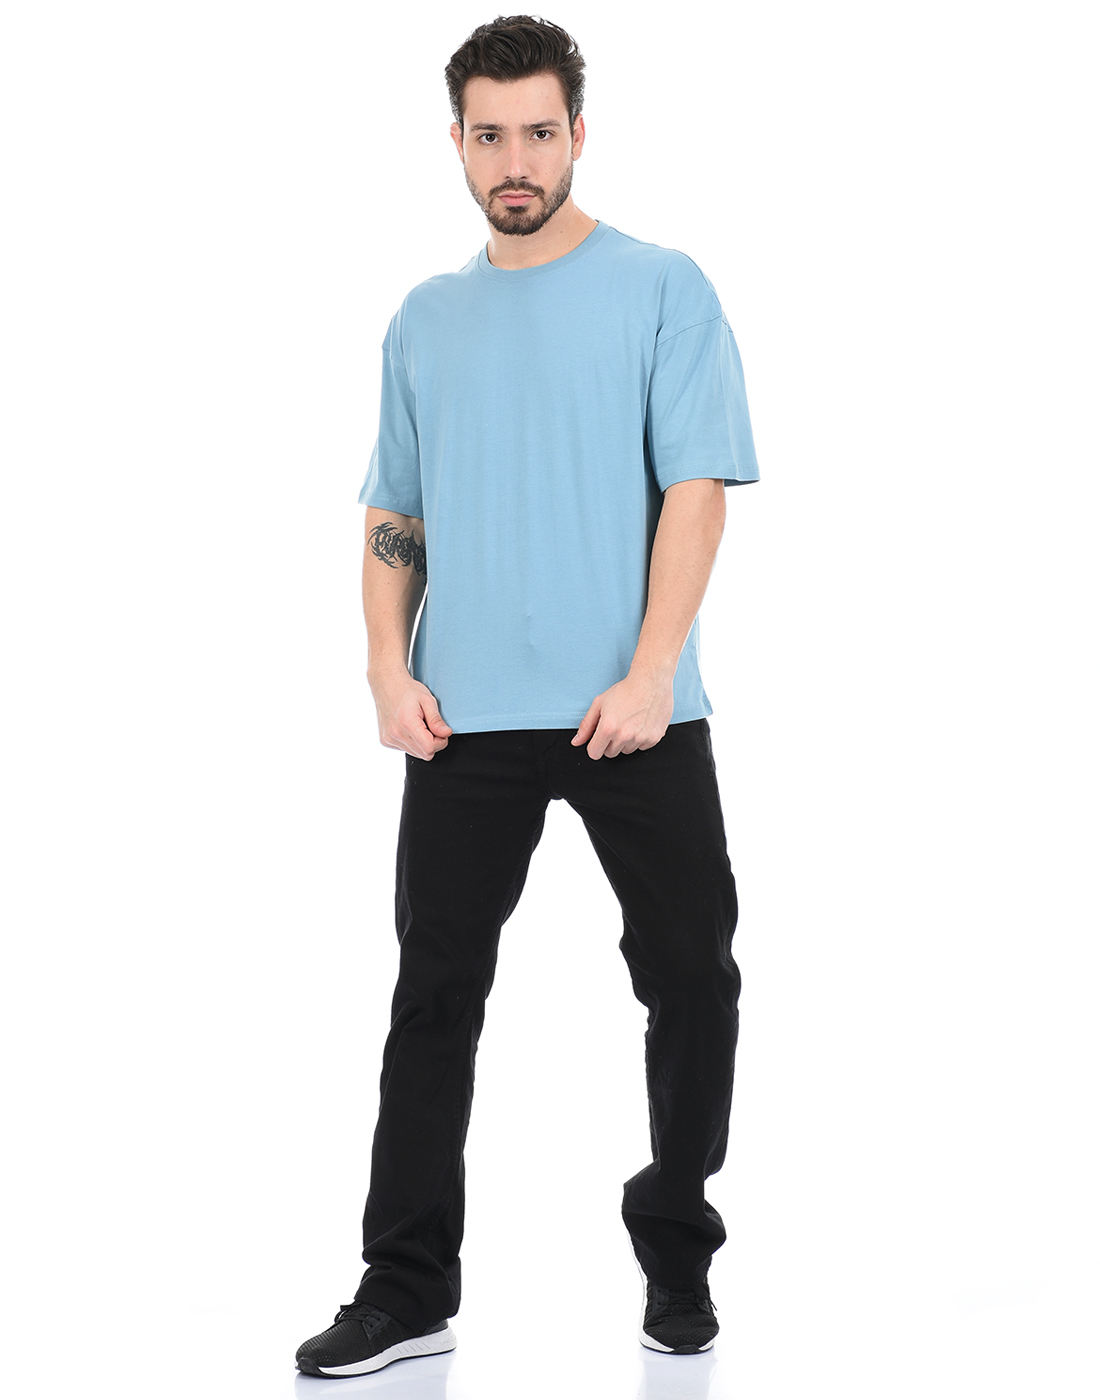 Oneway Unisex Solid Blue T-Shirt